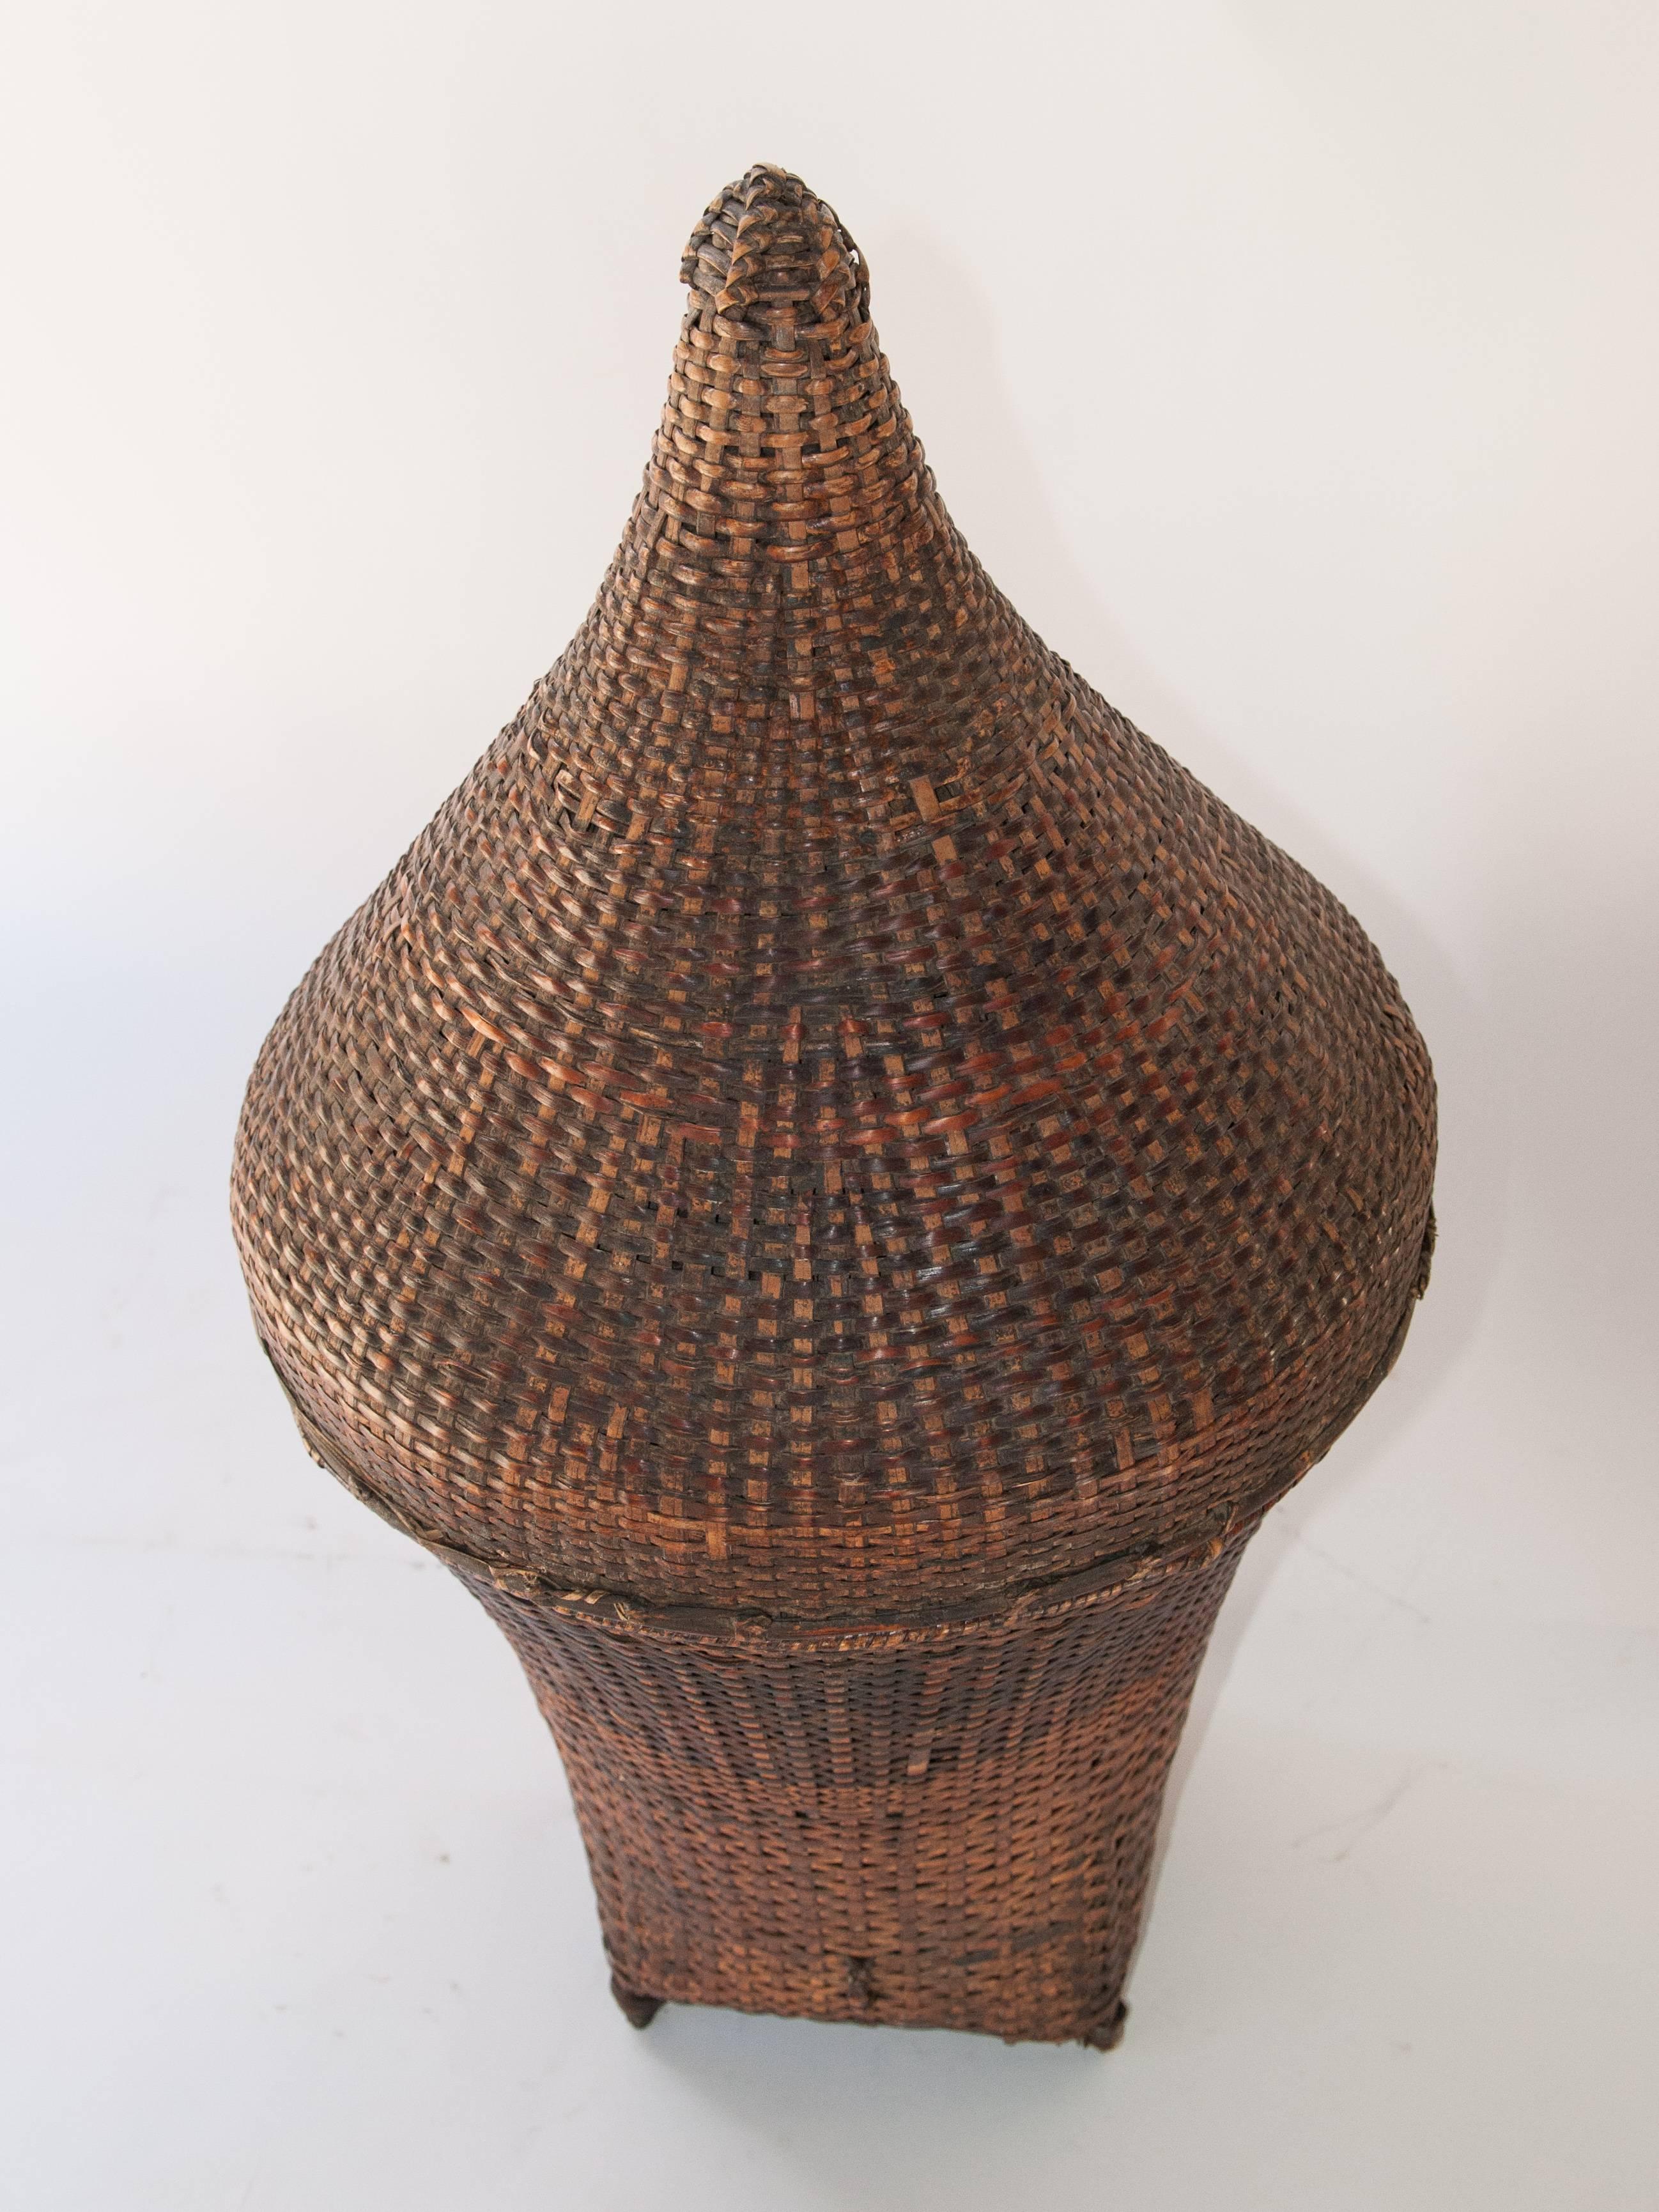 Burmese Lidded Handwoven Storage Basket, Chin People of Burma, Mid-20th Century, Bamboo